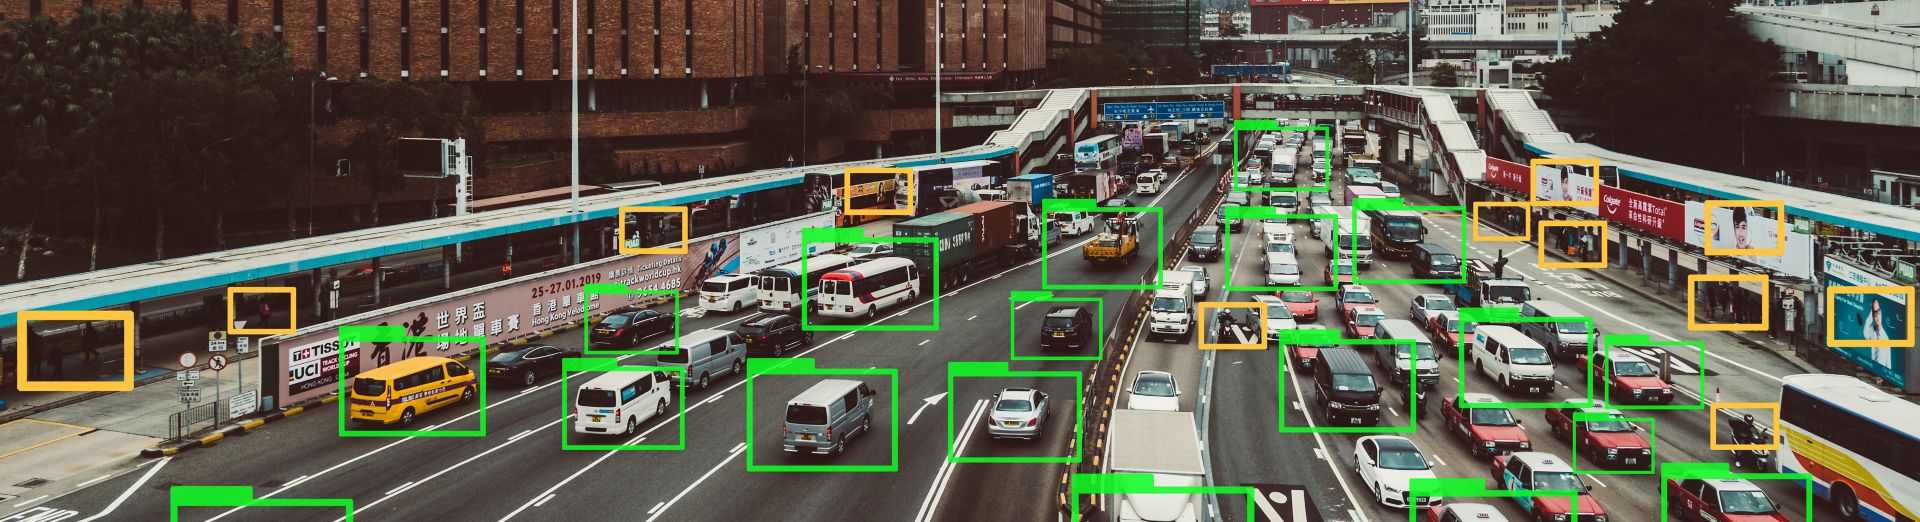 Tecnologia de machine learning a monitorizar automóveis numa autoestrada